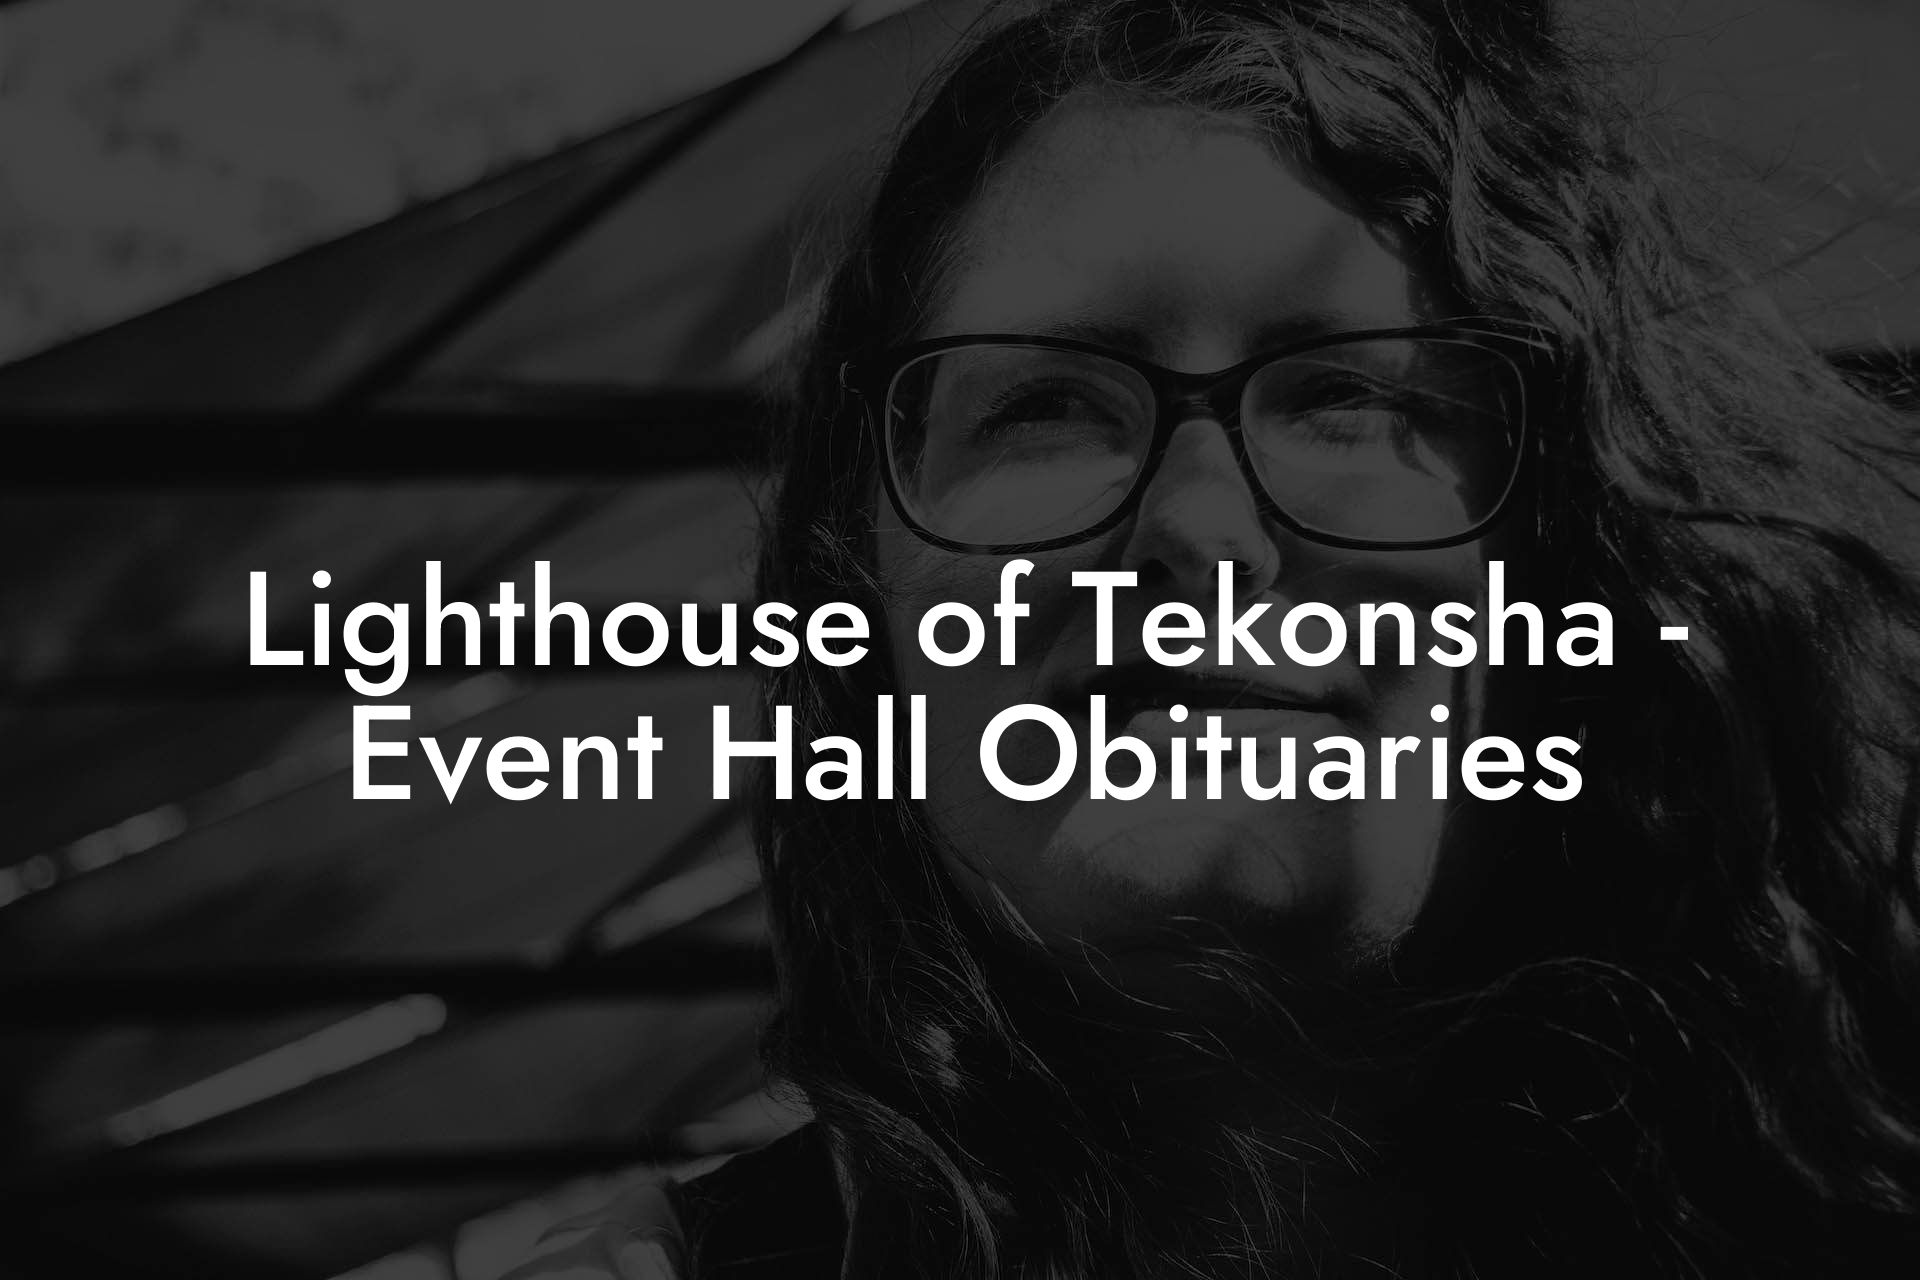 Lighthouse of Tekonsha - Event Hall Obituaries